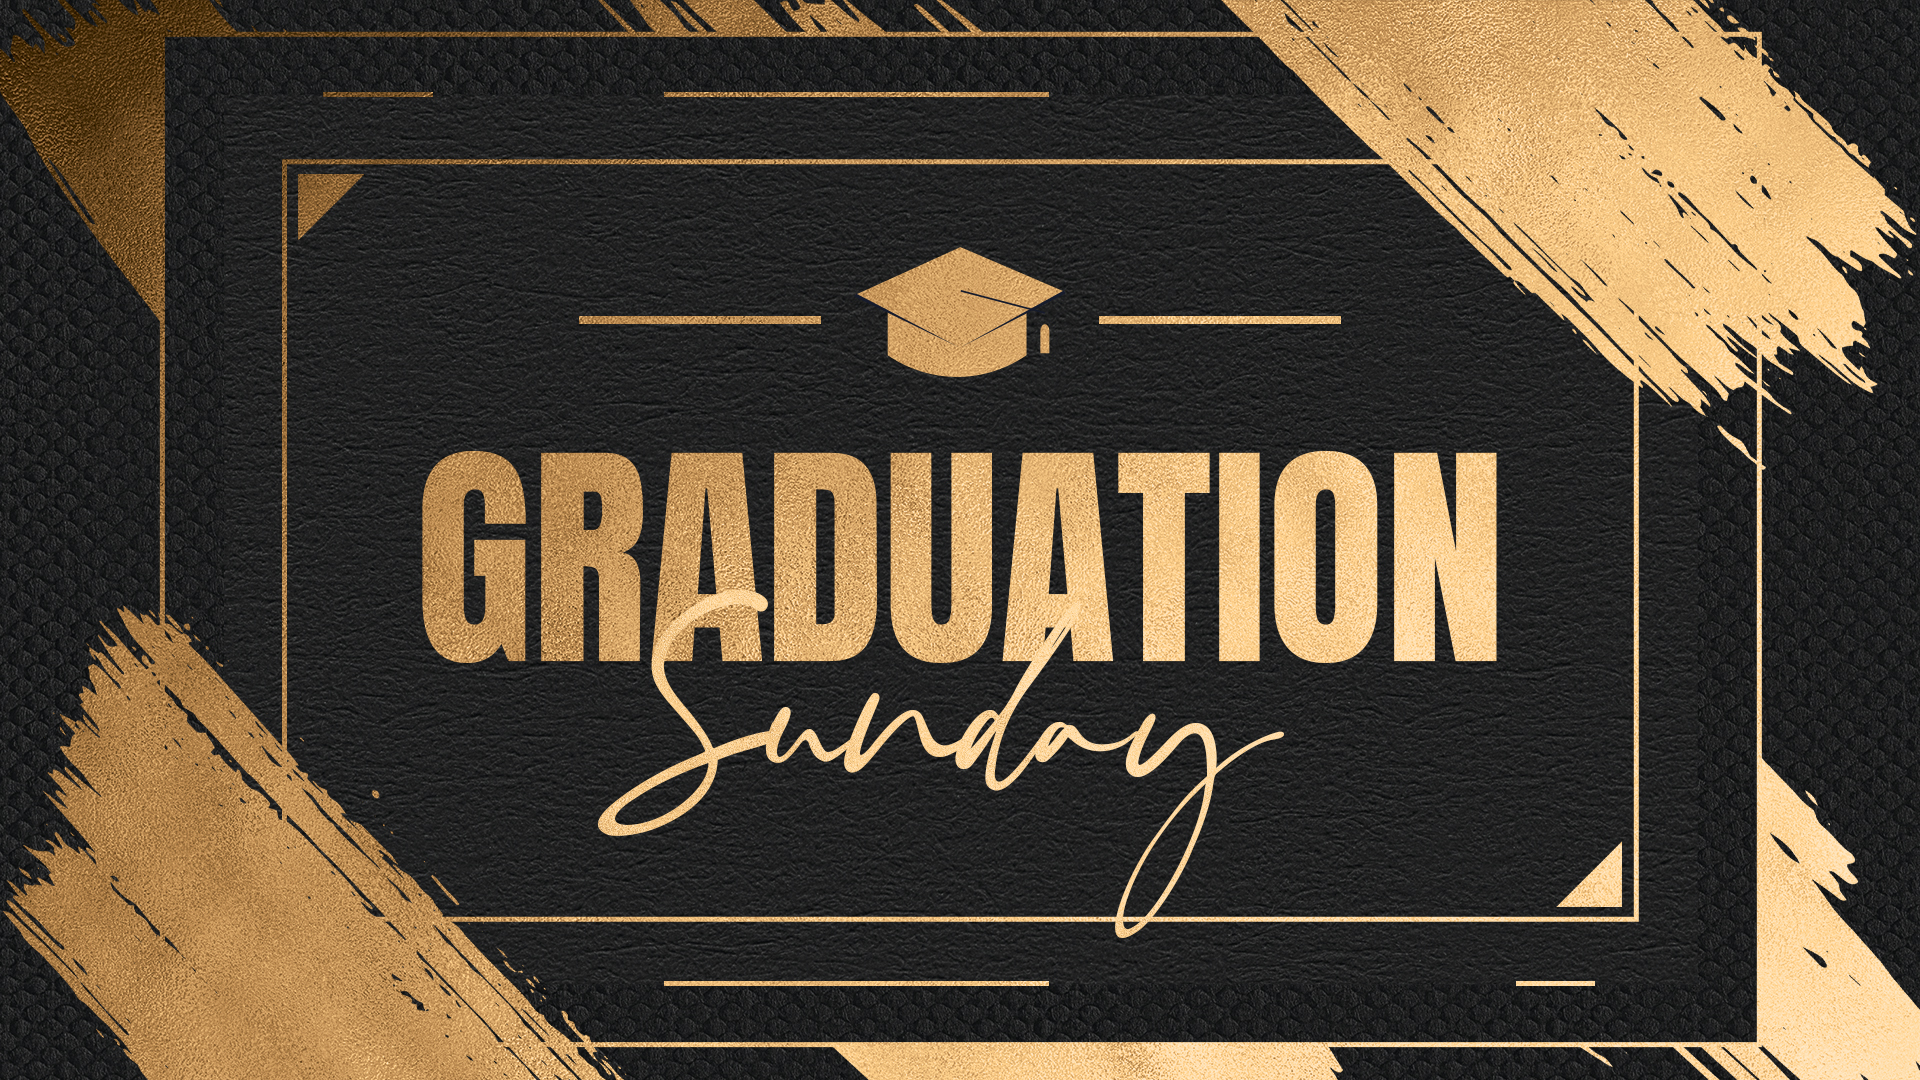 Graduation Sunday - May 19